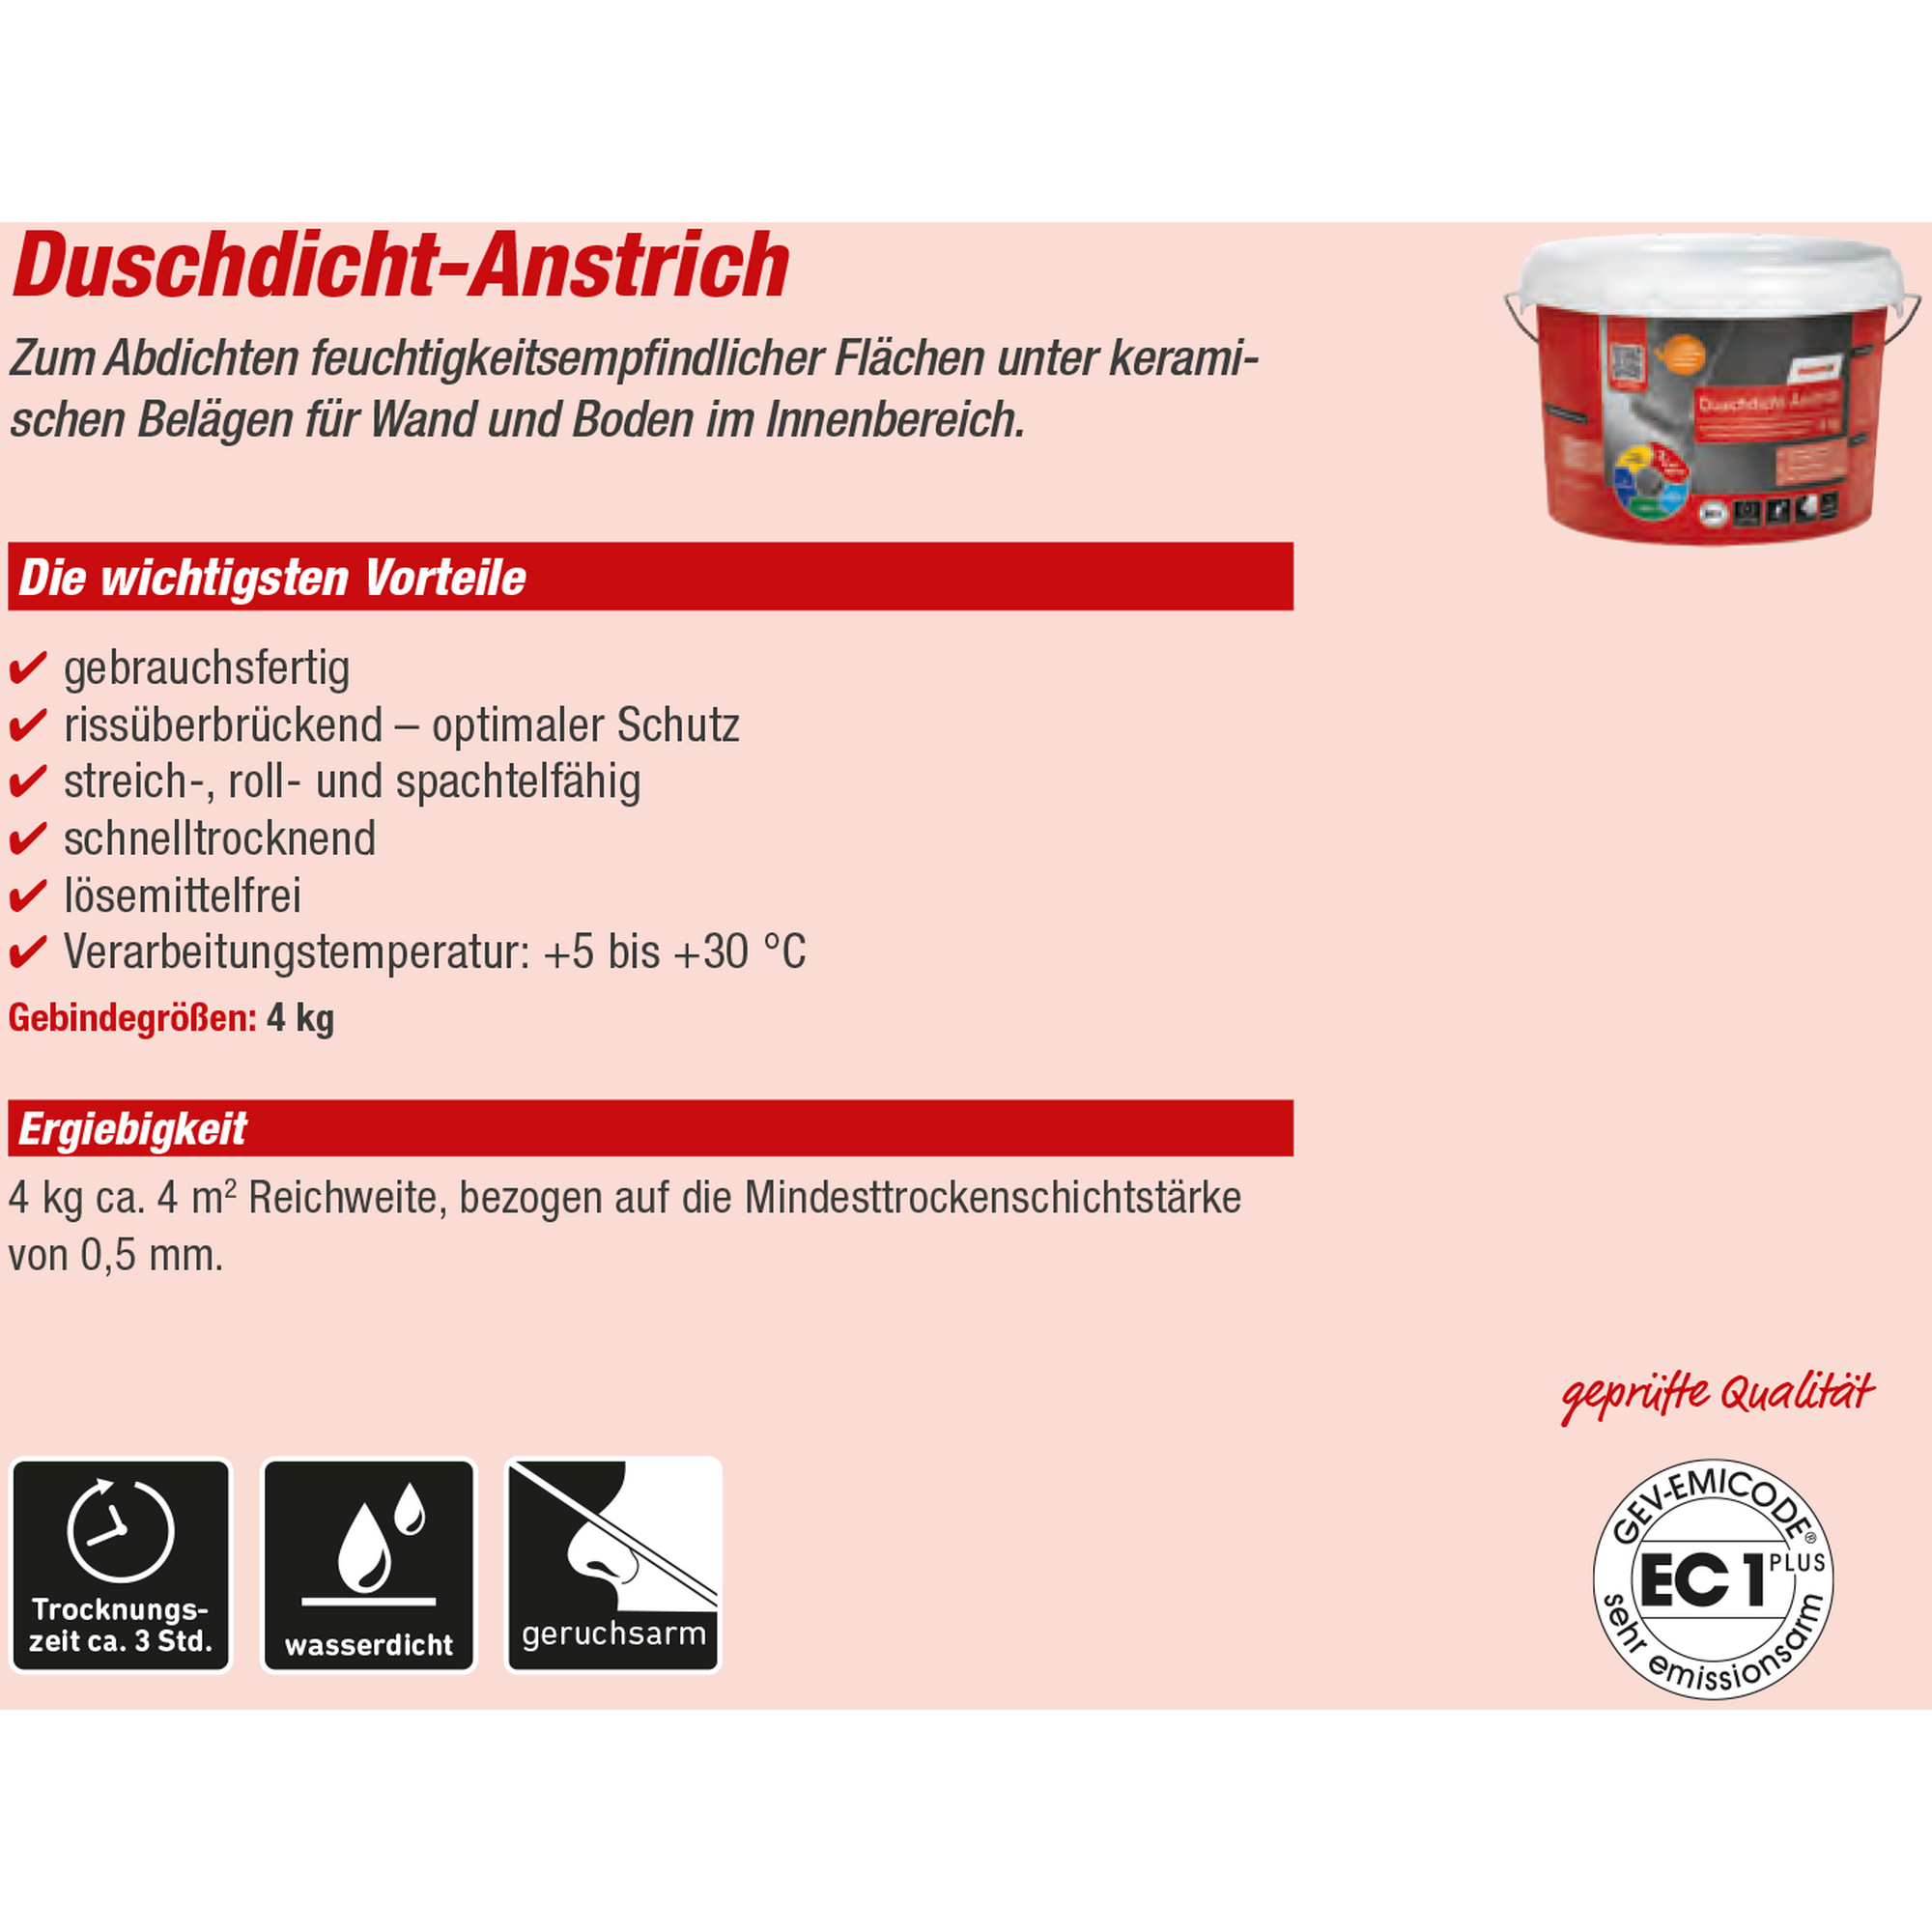 Duschdicht-Anstrich 4 kg + product picture